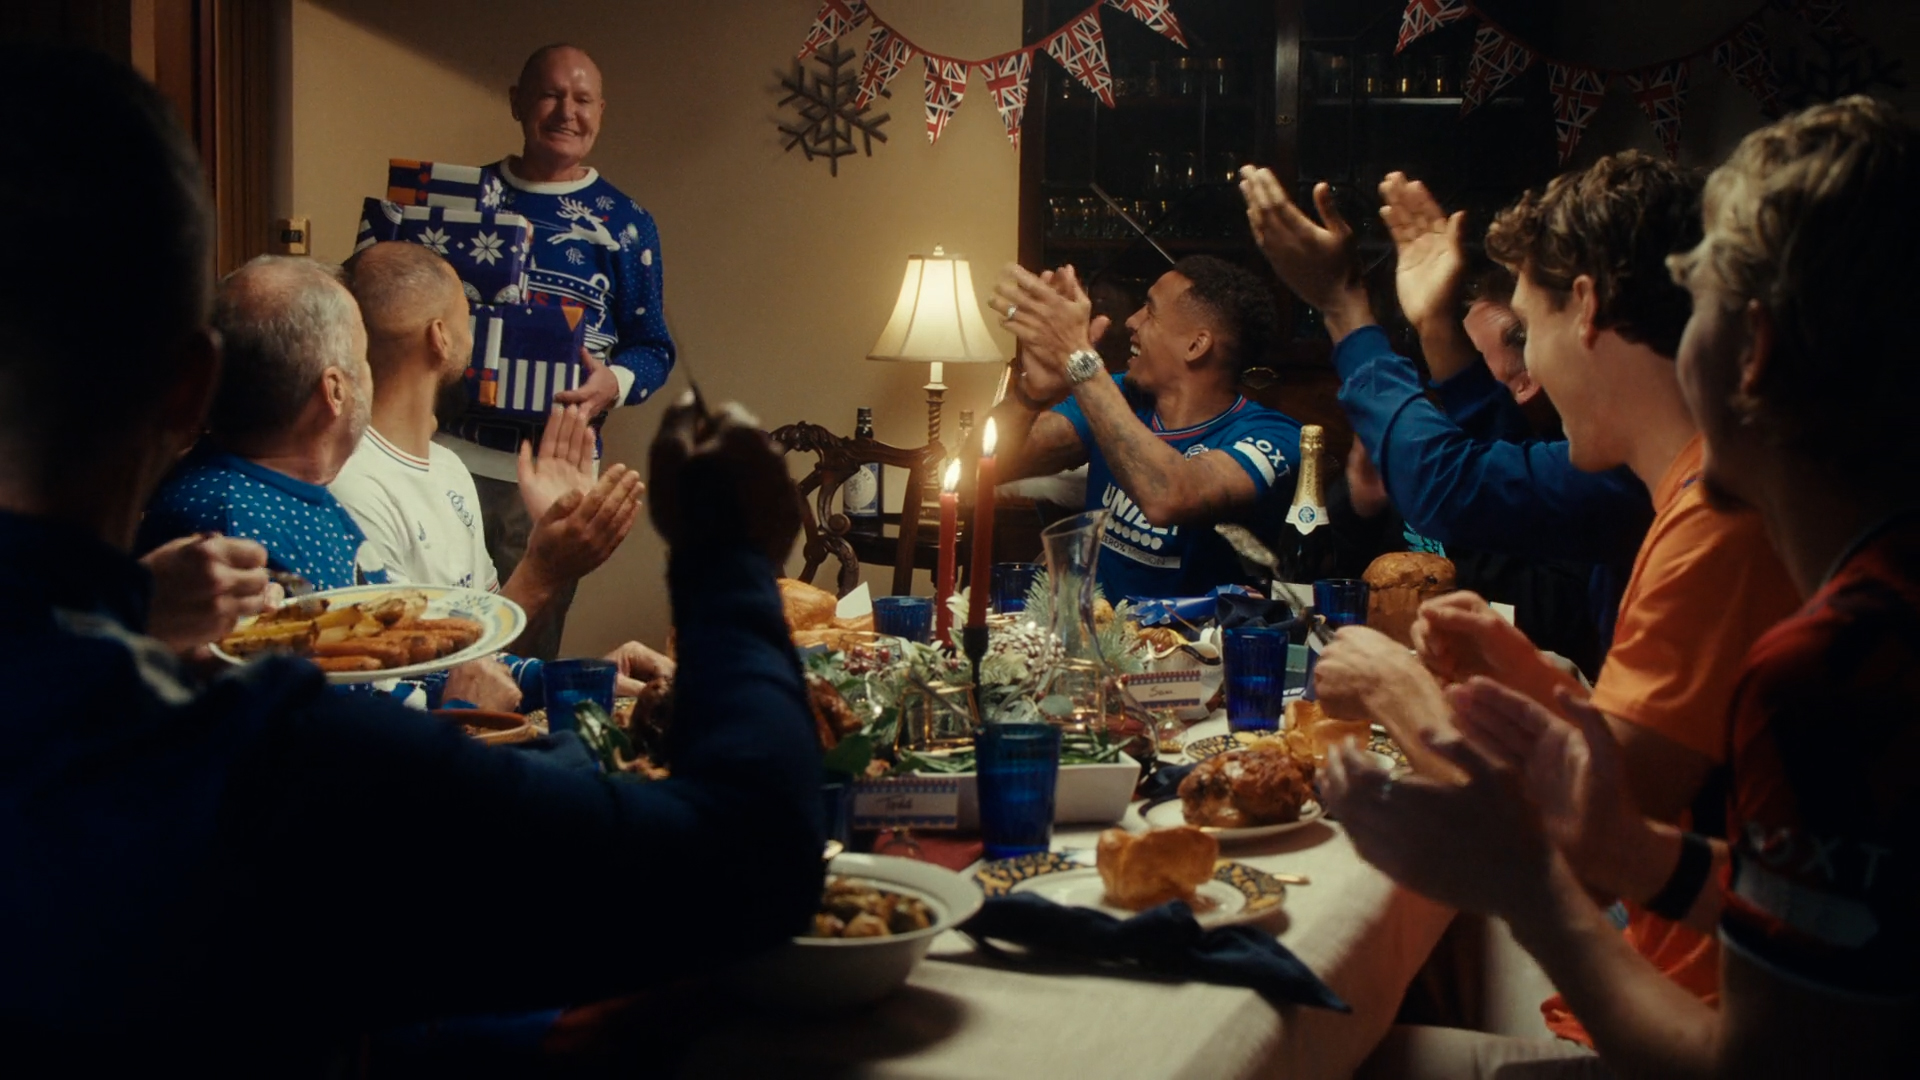 Gazza stars in Rangers’ Christmas social ad campaign